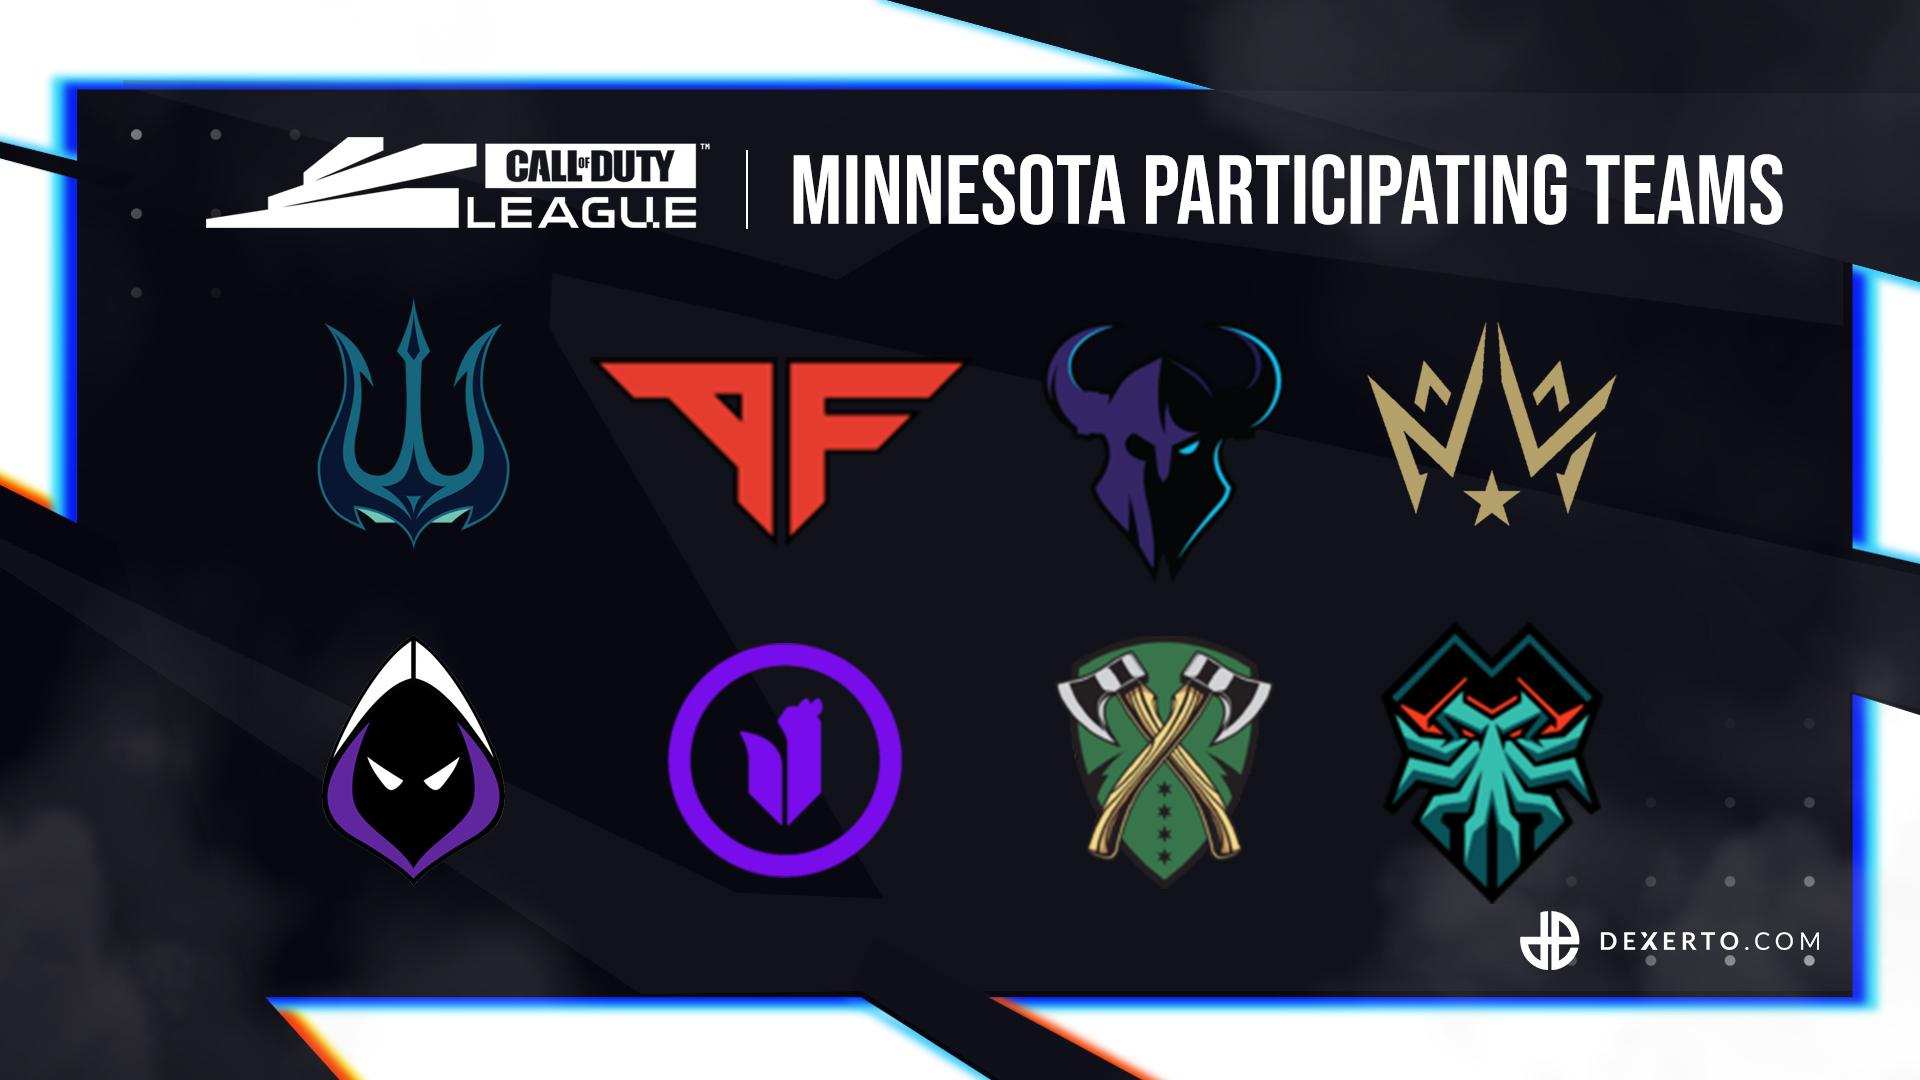 CDL Minnesota participating teams.